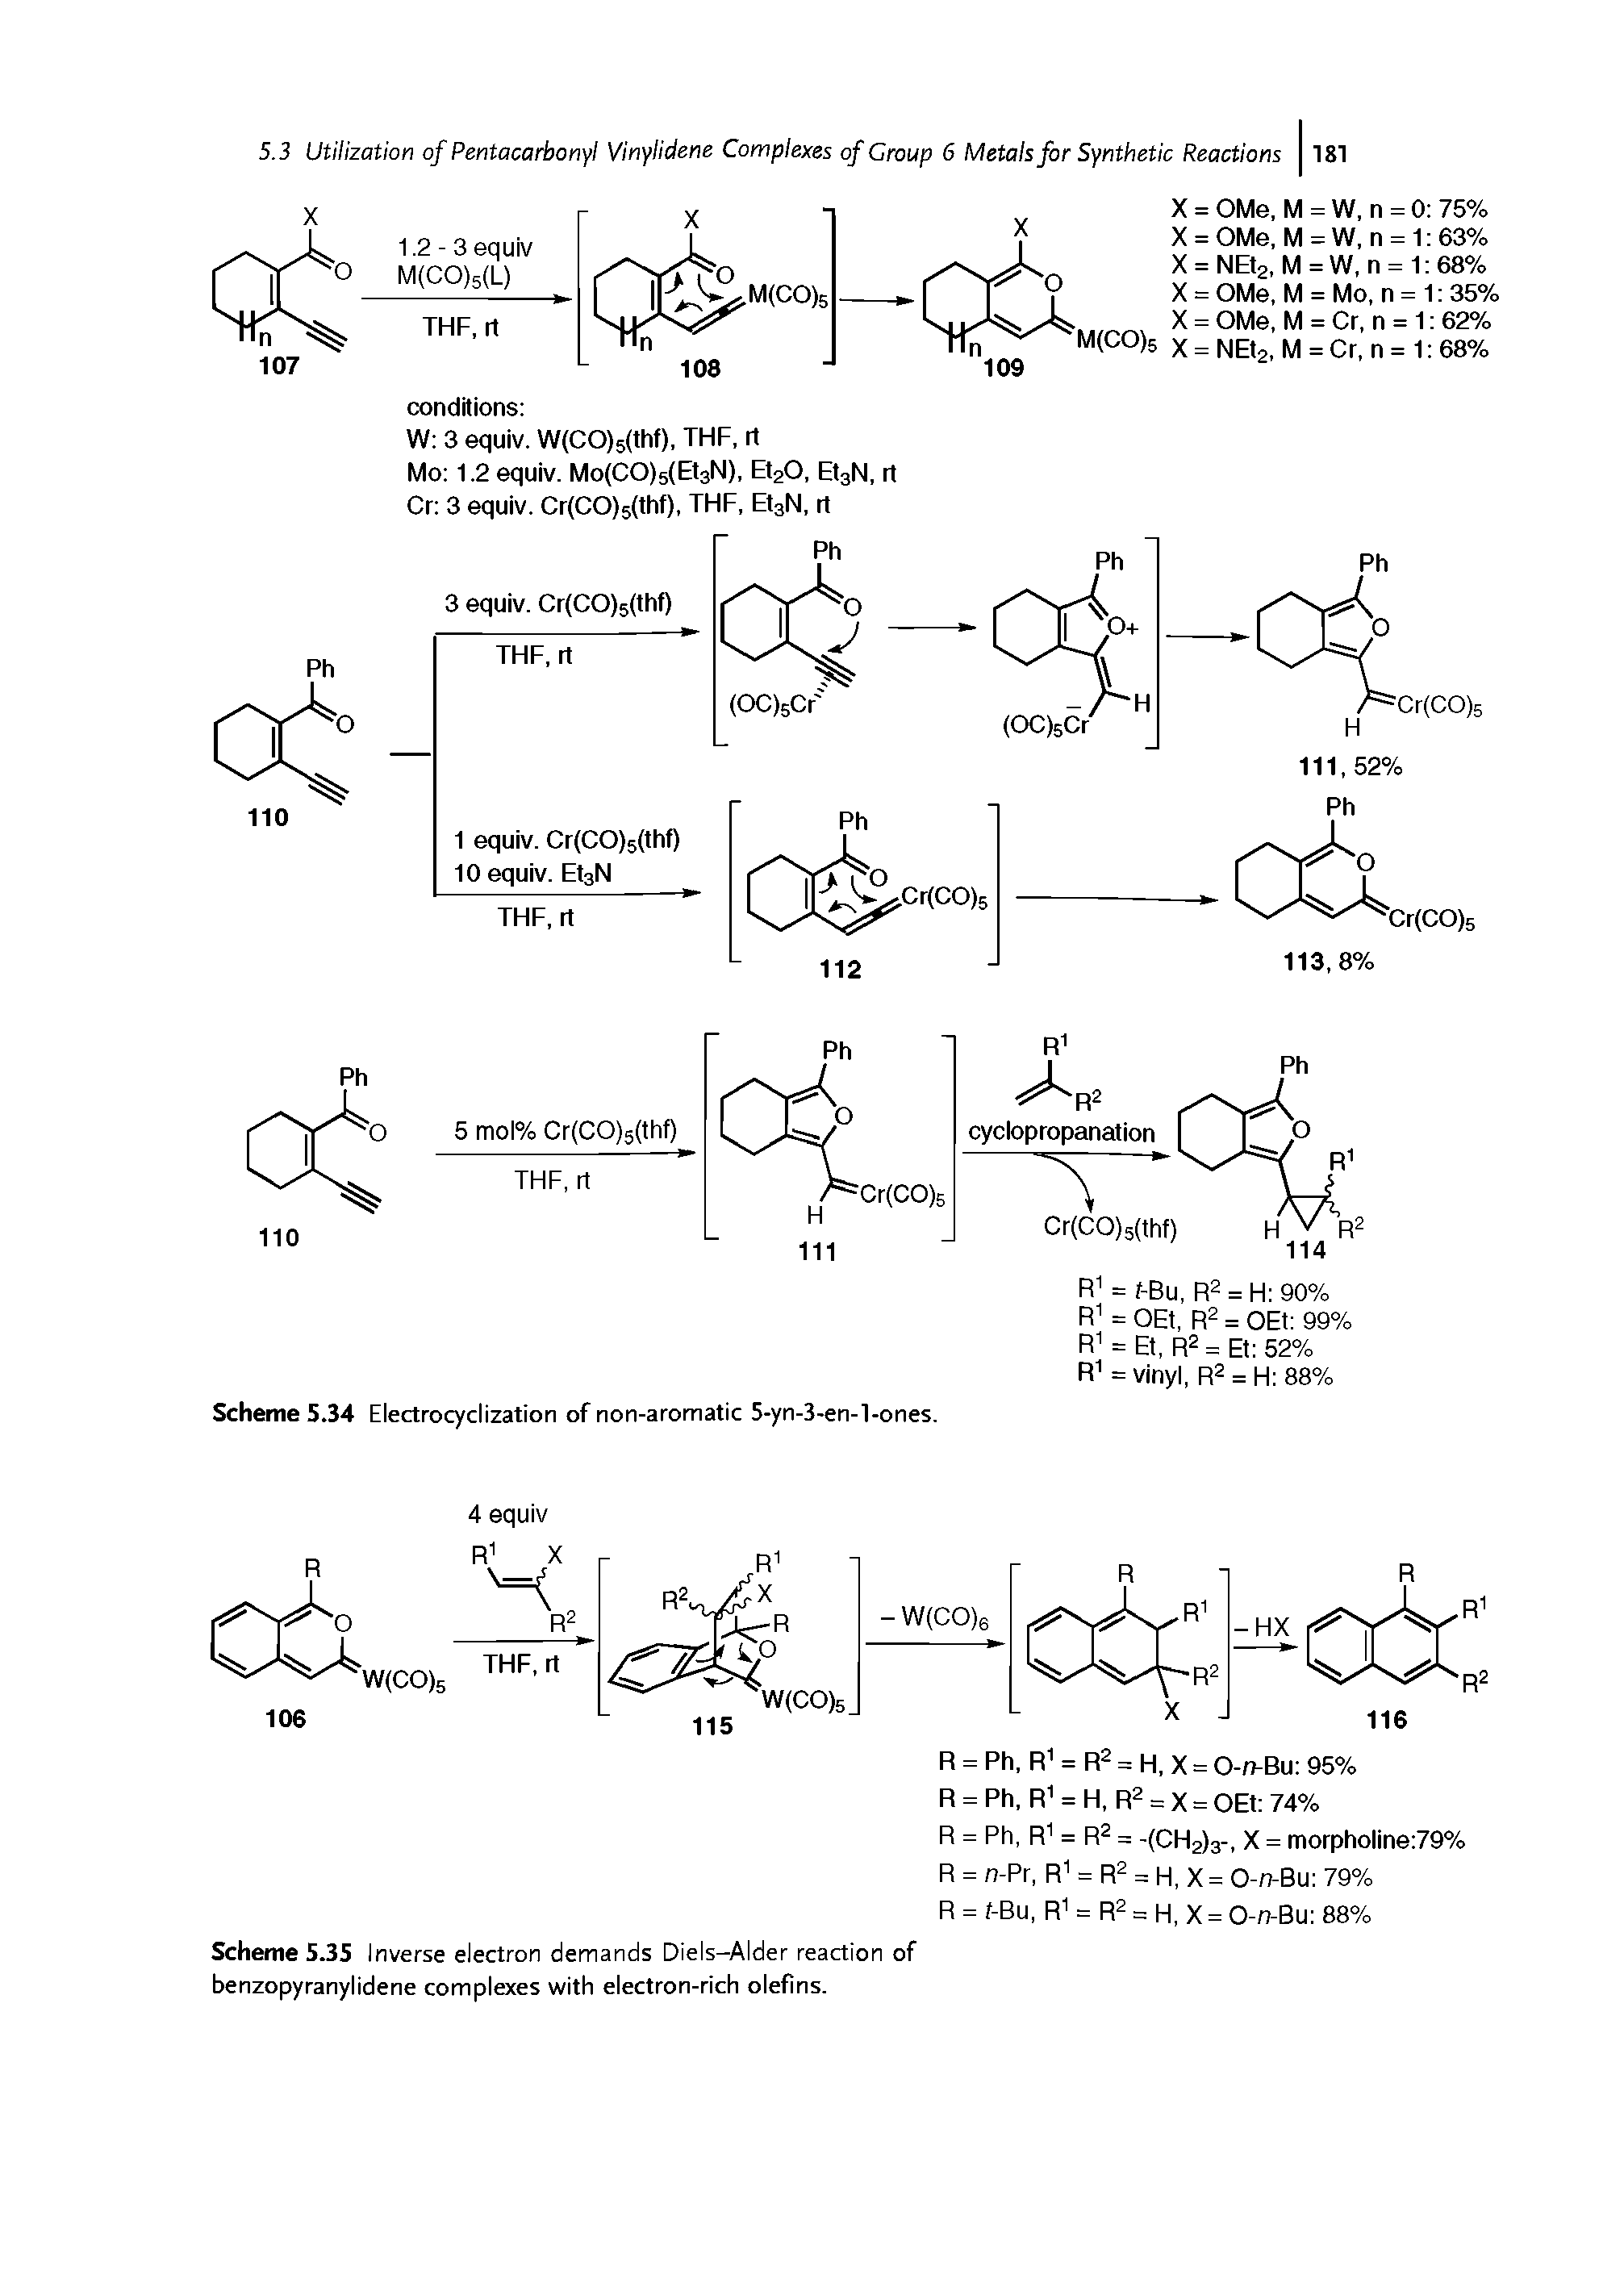 Scheme 5.35 Inverse electron demands Diels-Alder reaction of benzopyranylidene complexes with electron-rich olefins.